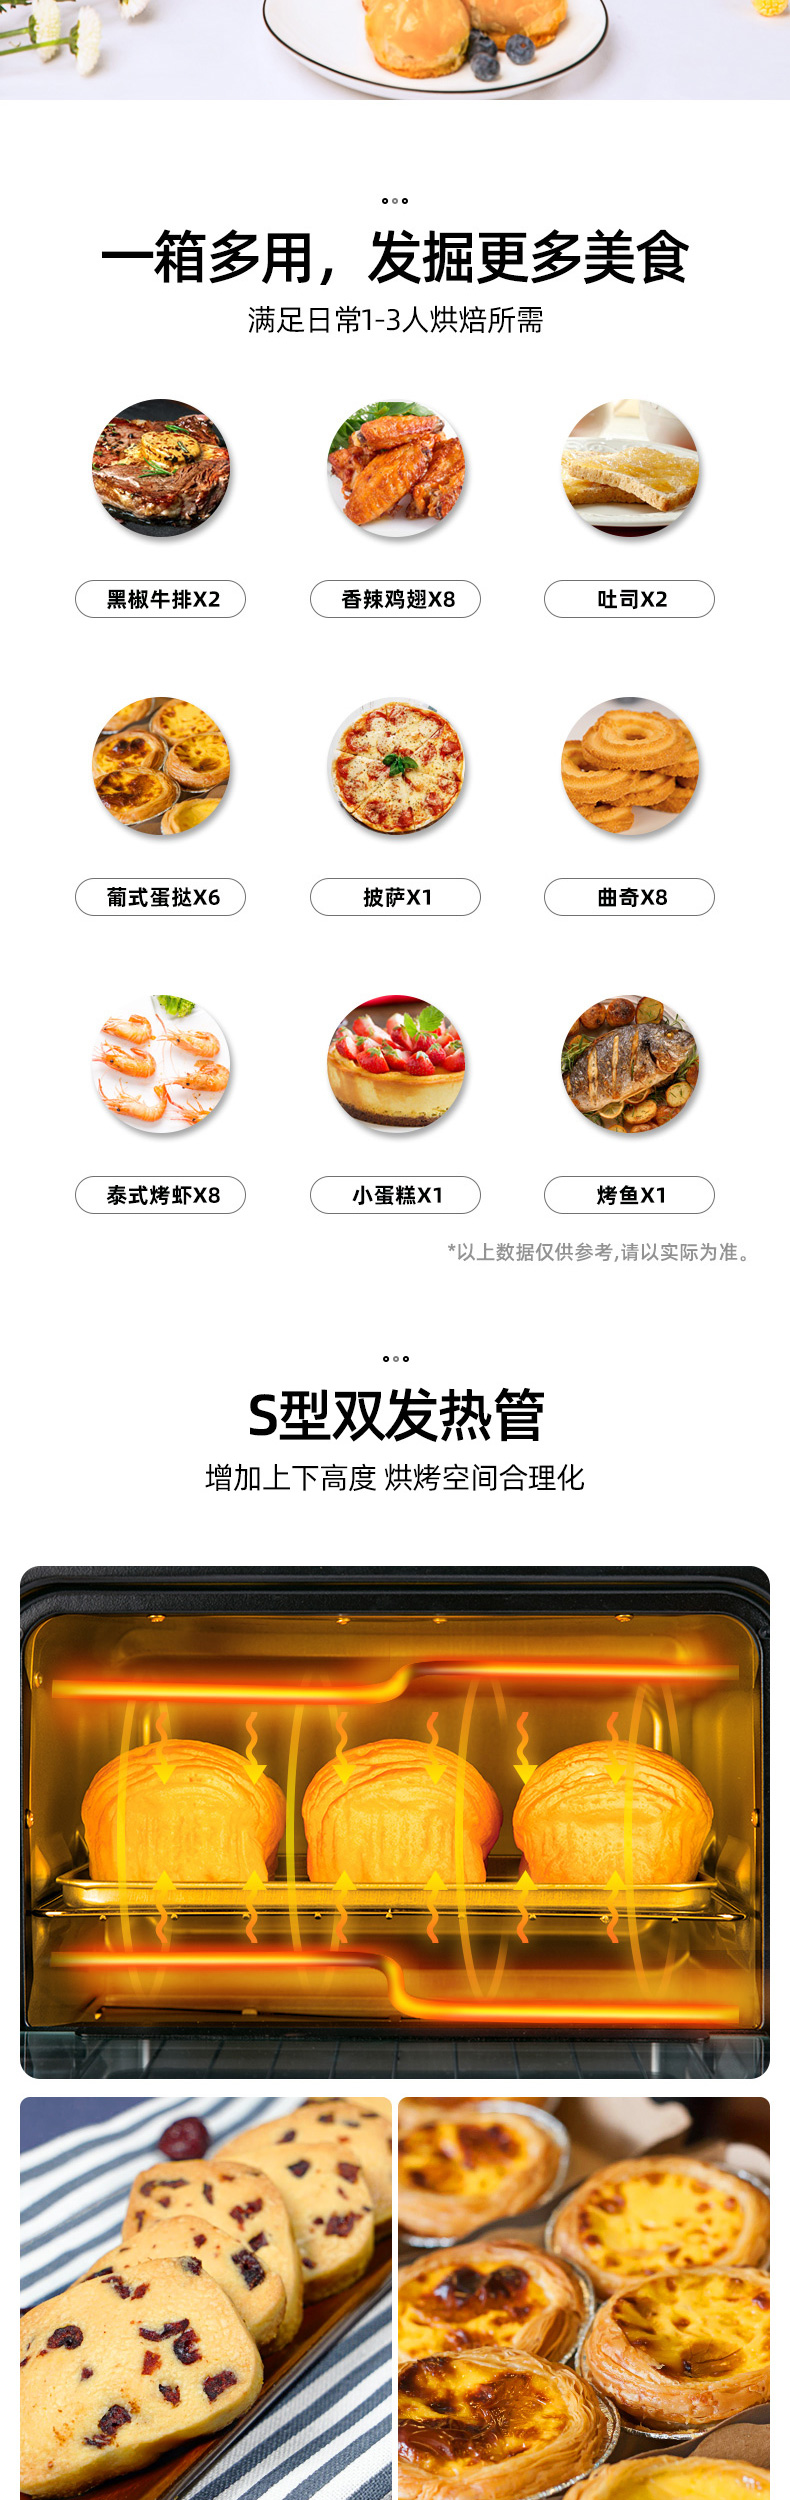 Joyoung/九阳 KX-10j910烤箱家用 烘焙 多功能电烤箱10升正品拼团